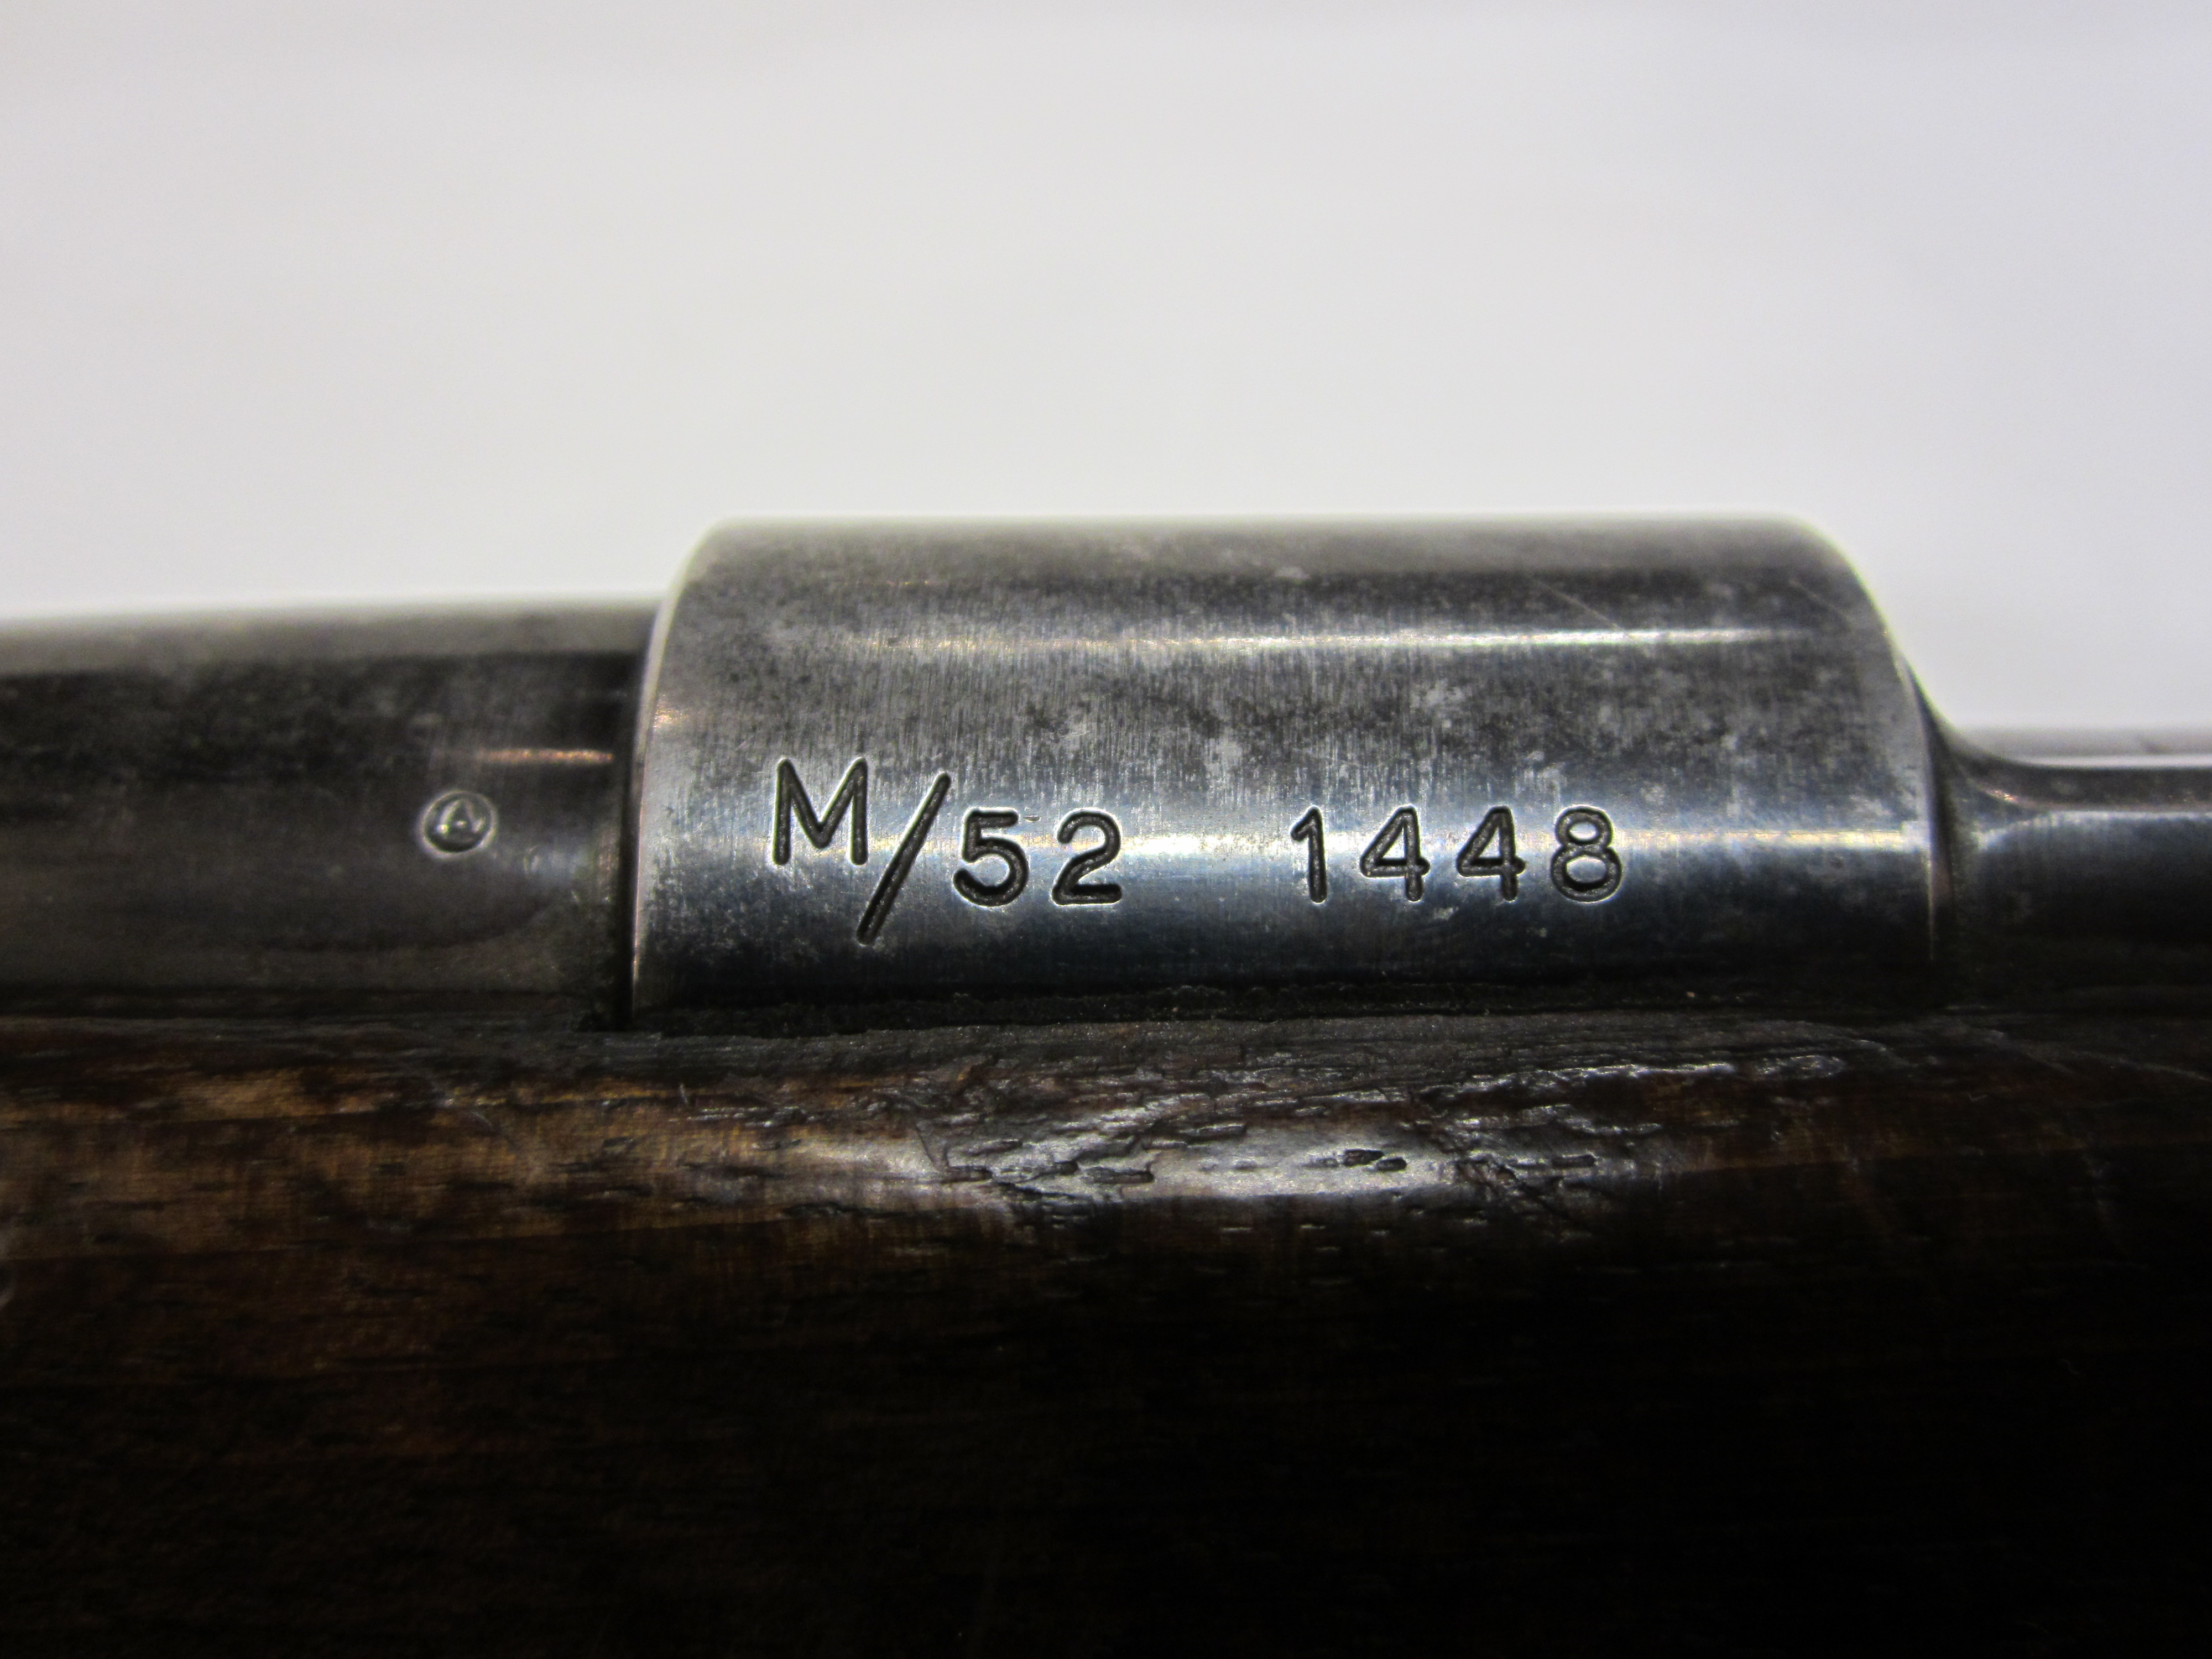 ./guns/rifle/bilder/Rifle-Kongsberg-Mauser-M52-1448-4.JPG